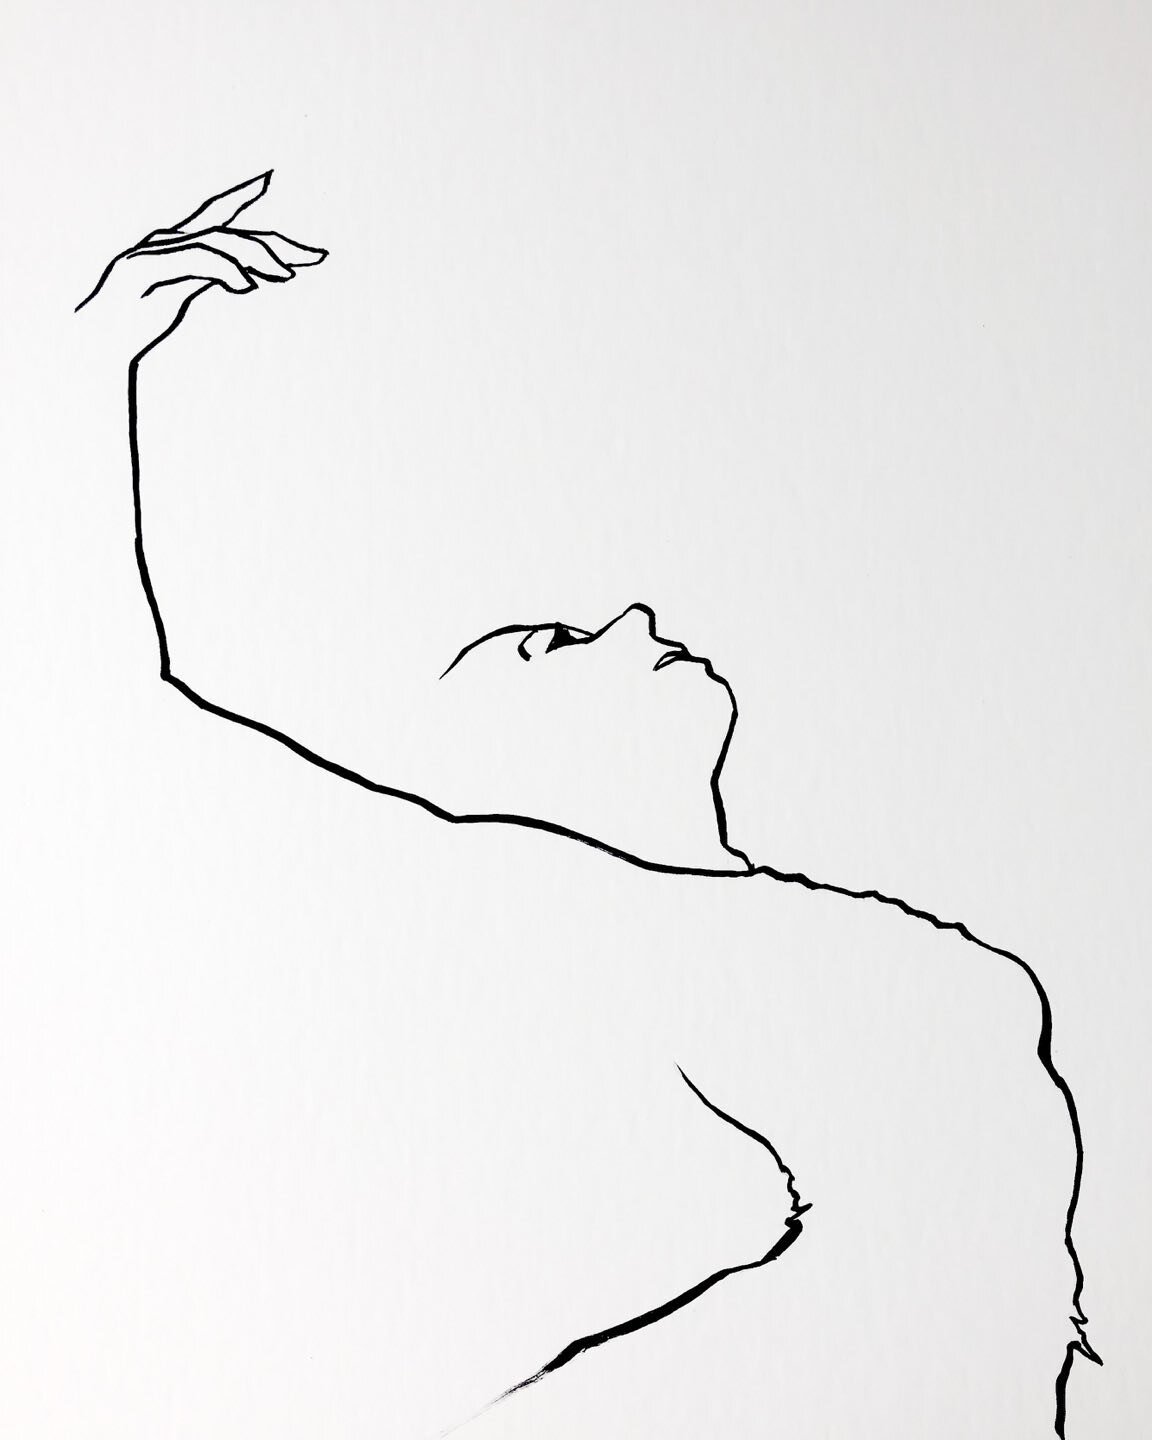 The 3rd of four simple brush line drawings of ballerinas. Gouache on art board. 30 x37 cm.

#ballerina #dance #movement #art #drawing #artistsoninstagram #warwickwoodartist #gouache #line #brush